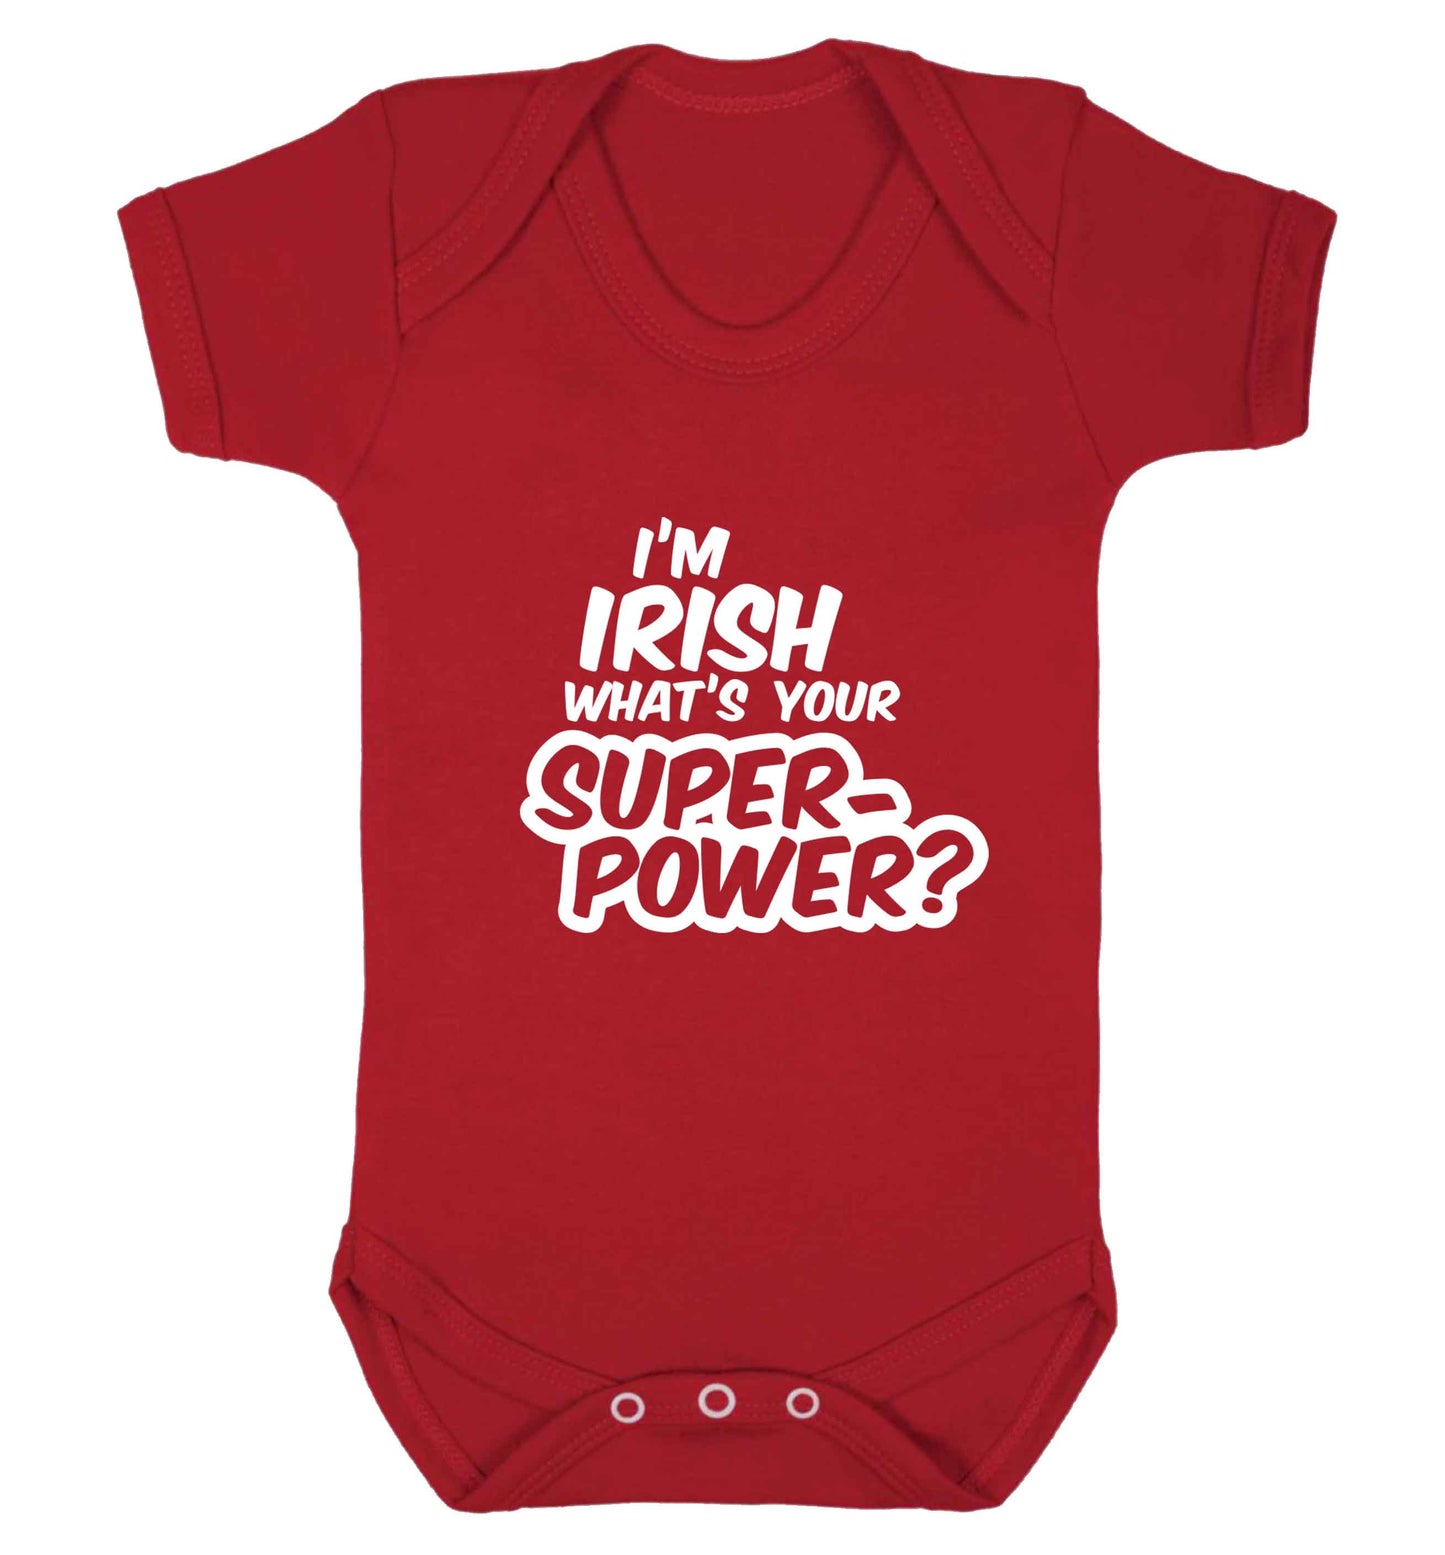 I'm Irish what's your superpower? baby vest red 18-24 months